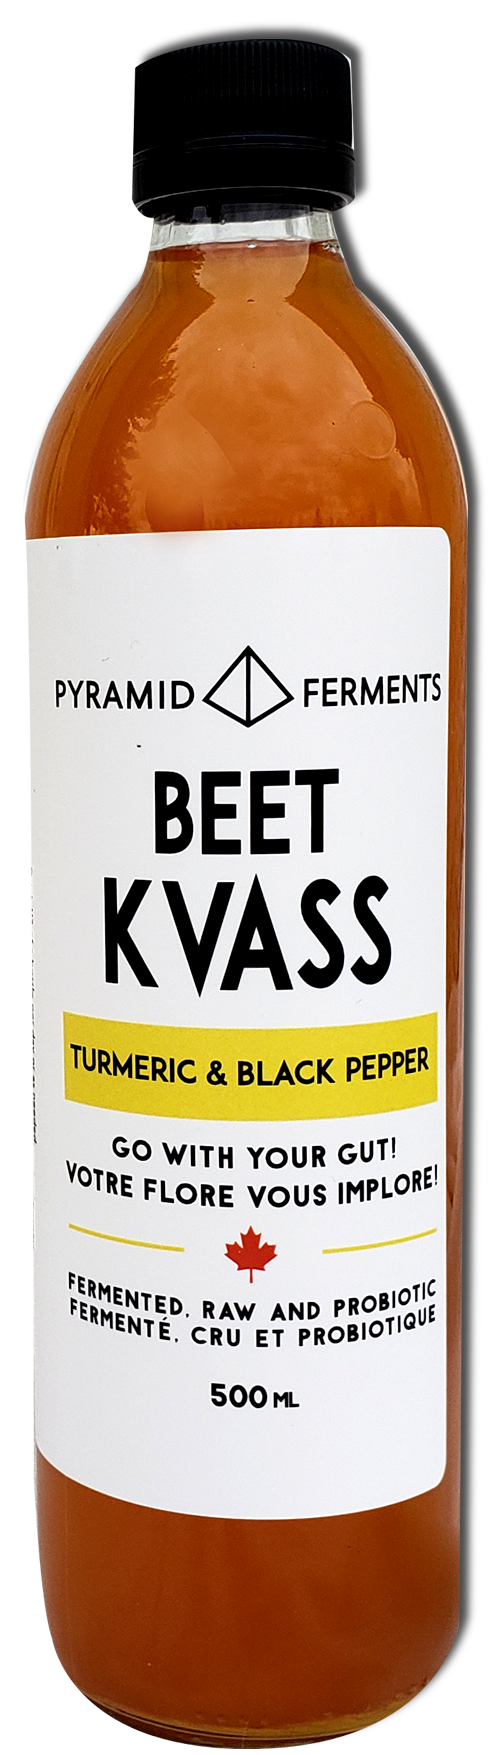 turmeric black pepper kvass